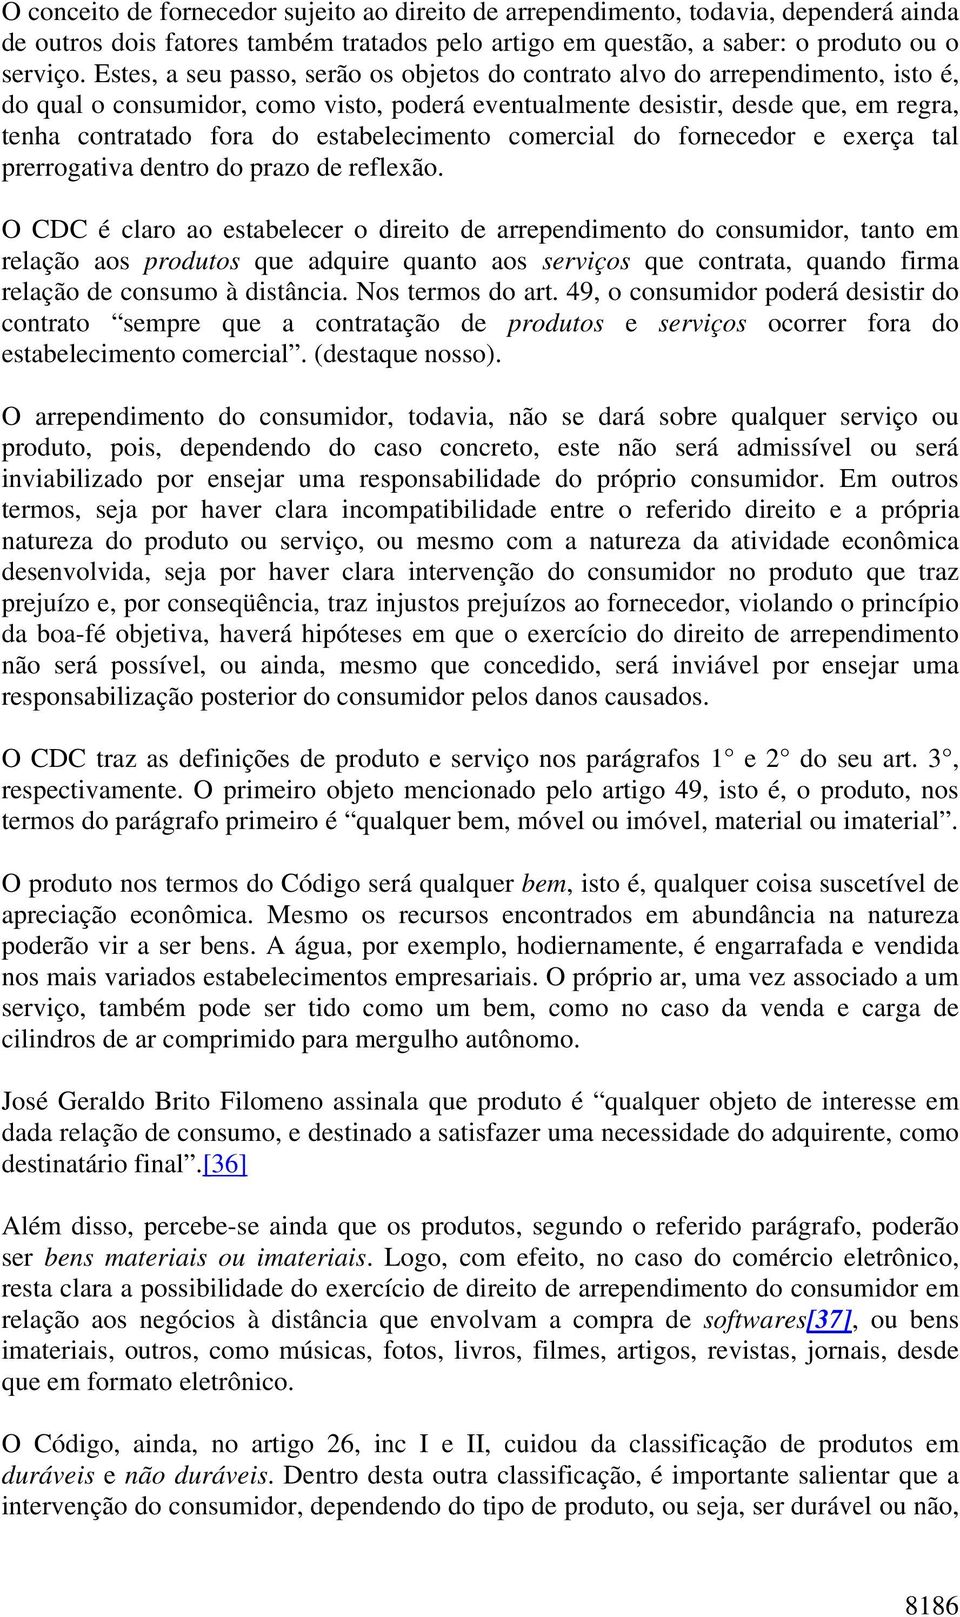 E-COMMERCE E O DIREITO DE ARREPENDIMENTO * E-COMMERCE AND THE RIGHT TO  RETURN UNWANTED MERCHANDISE - PDF Download grátis